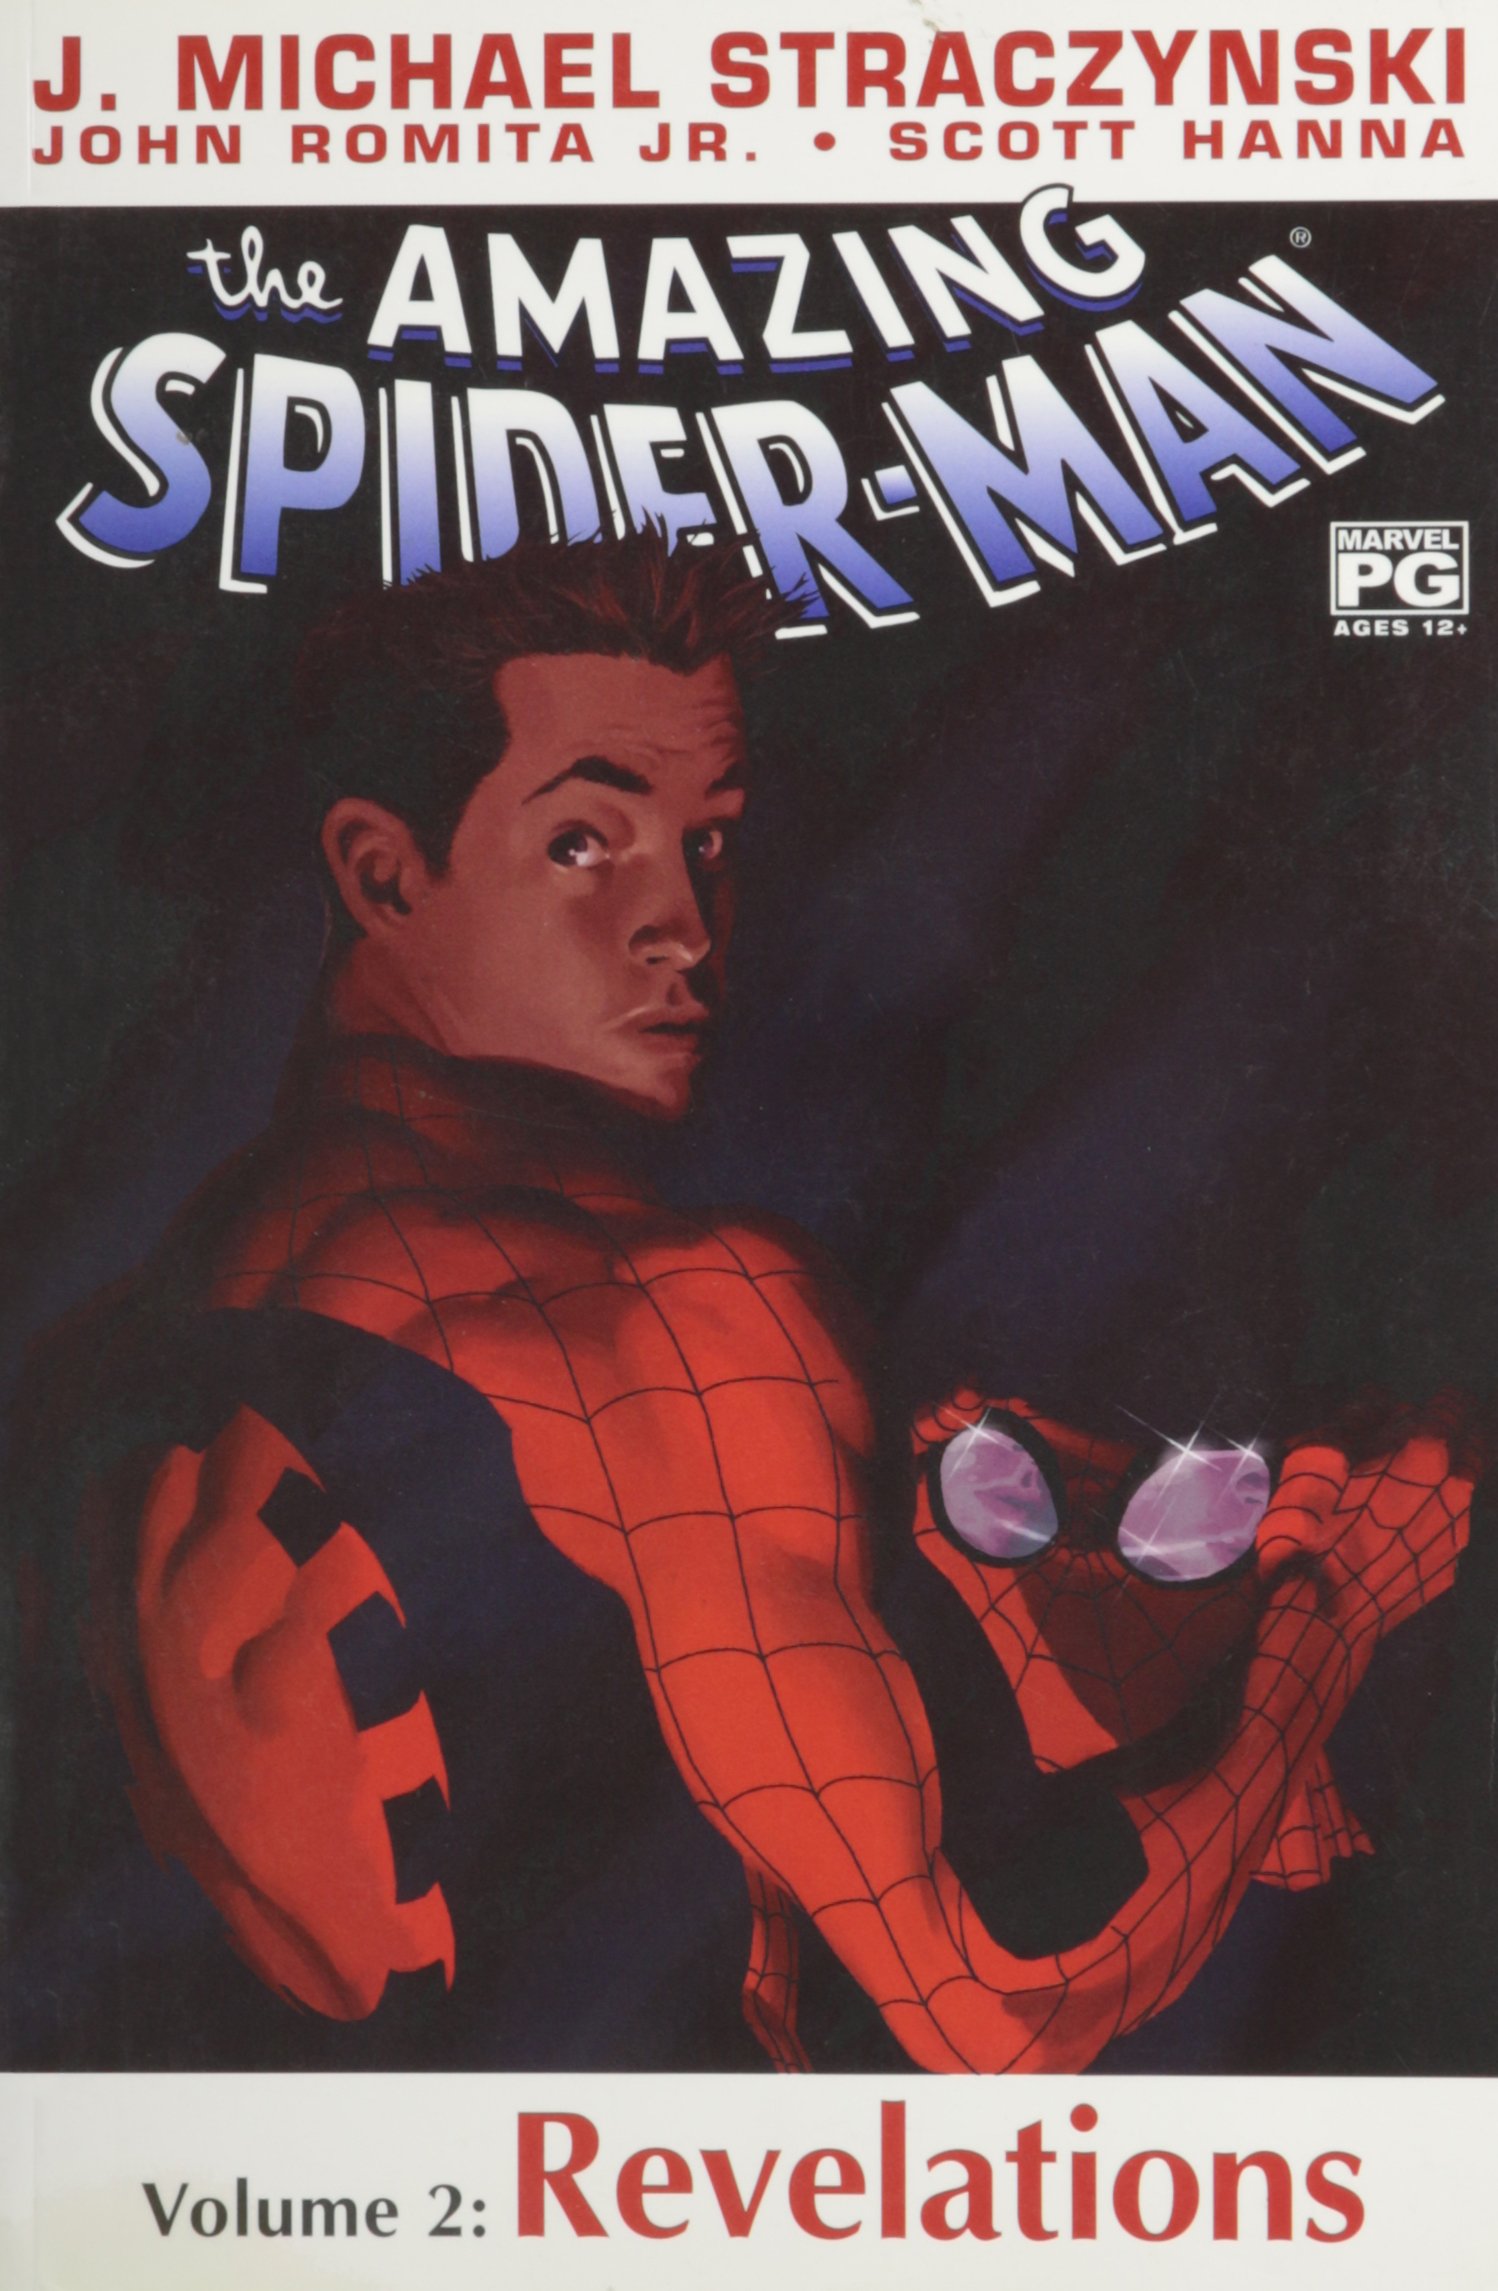 The Amazing Spider-Man Volume 2 Revelations